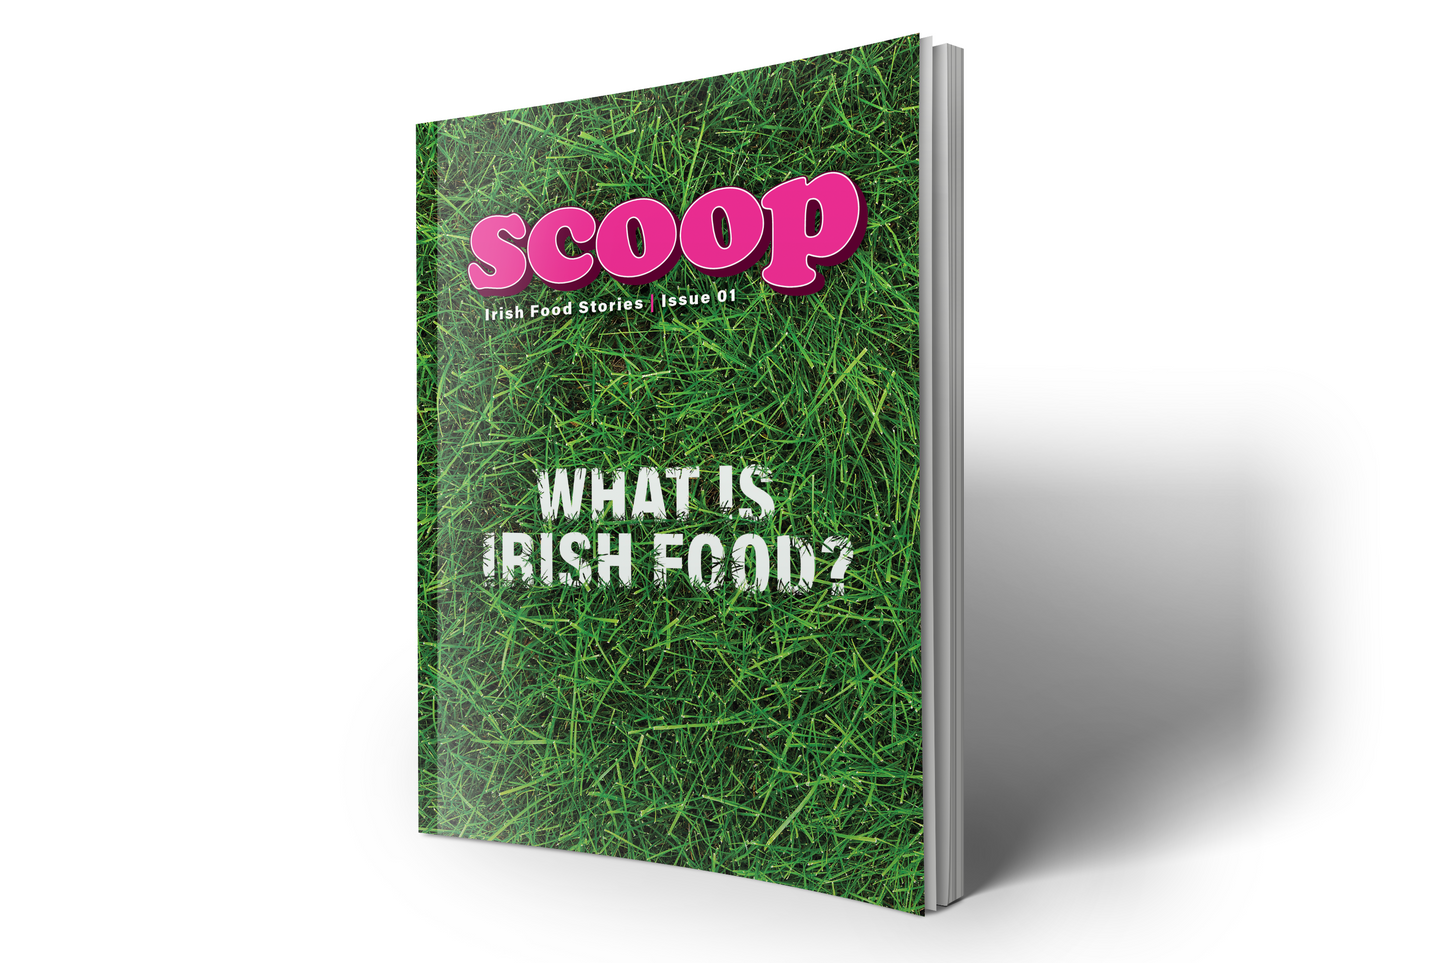 Scoop Issue 01